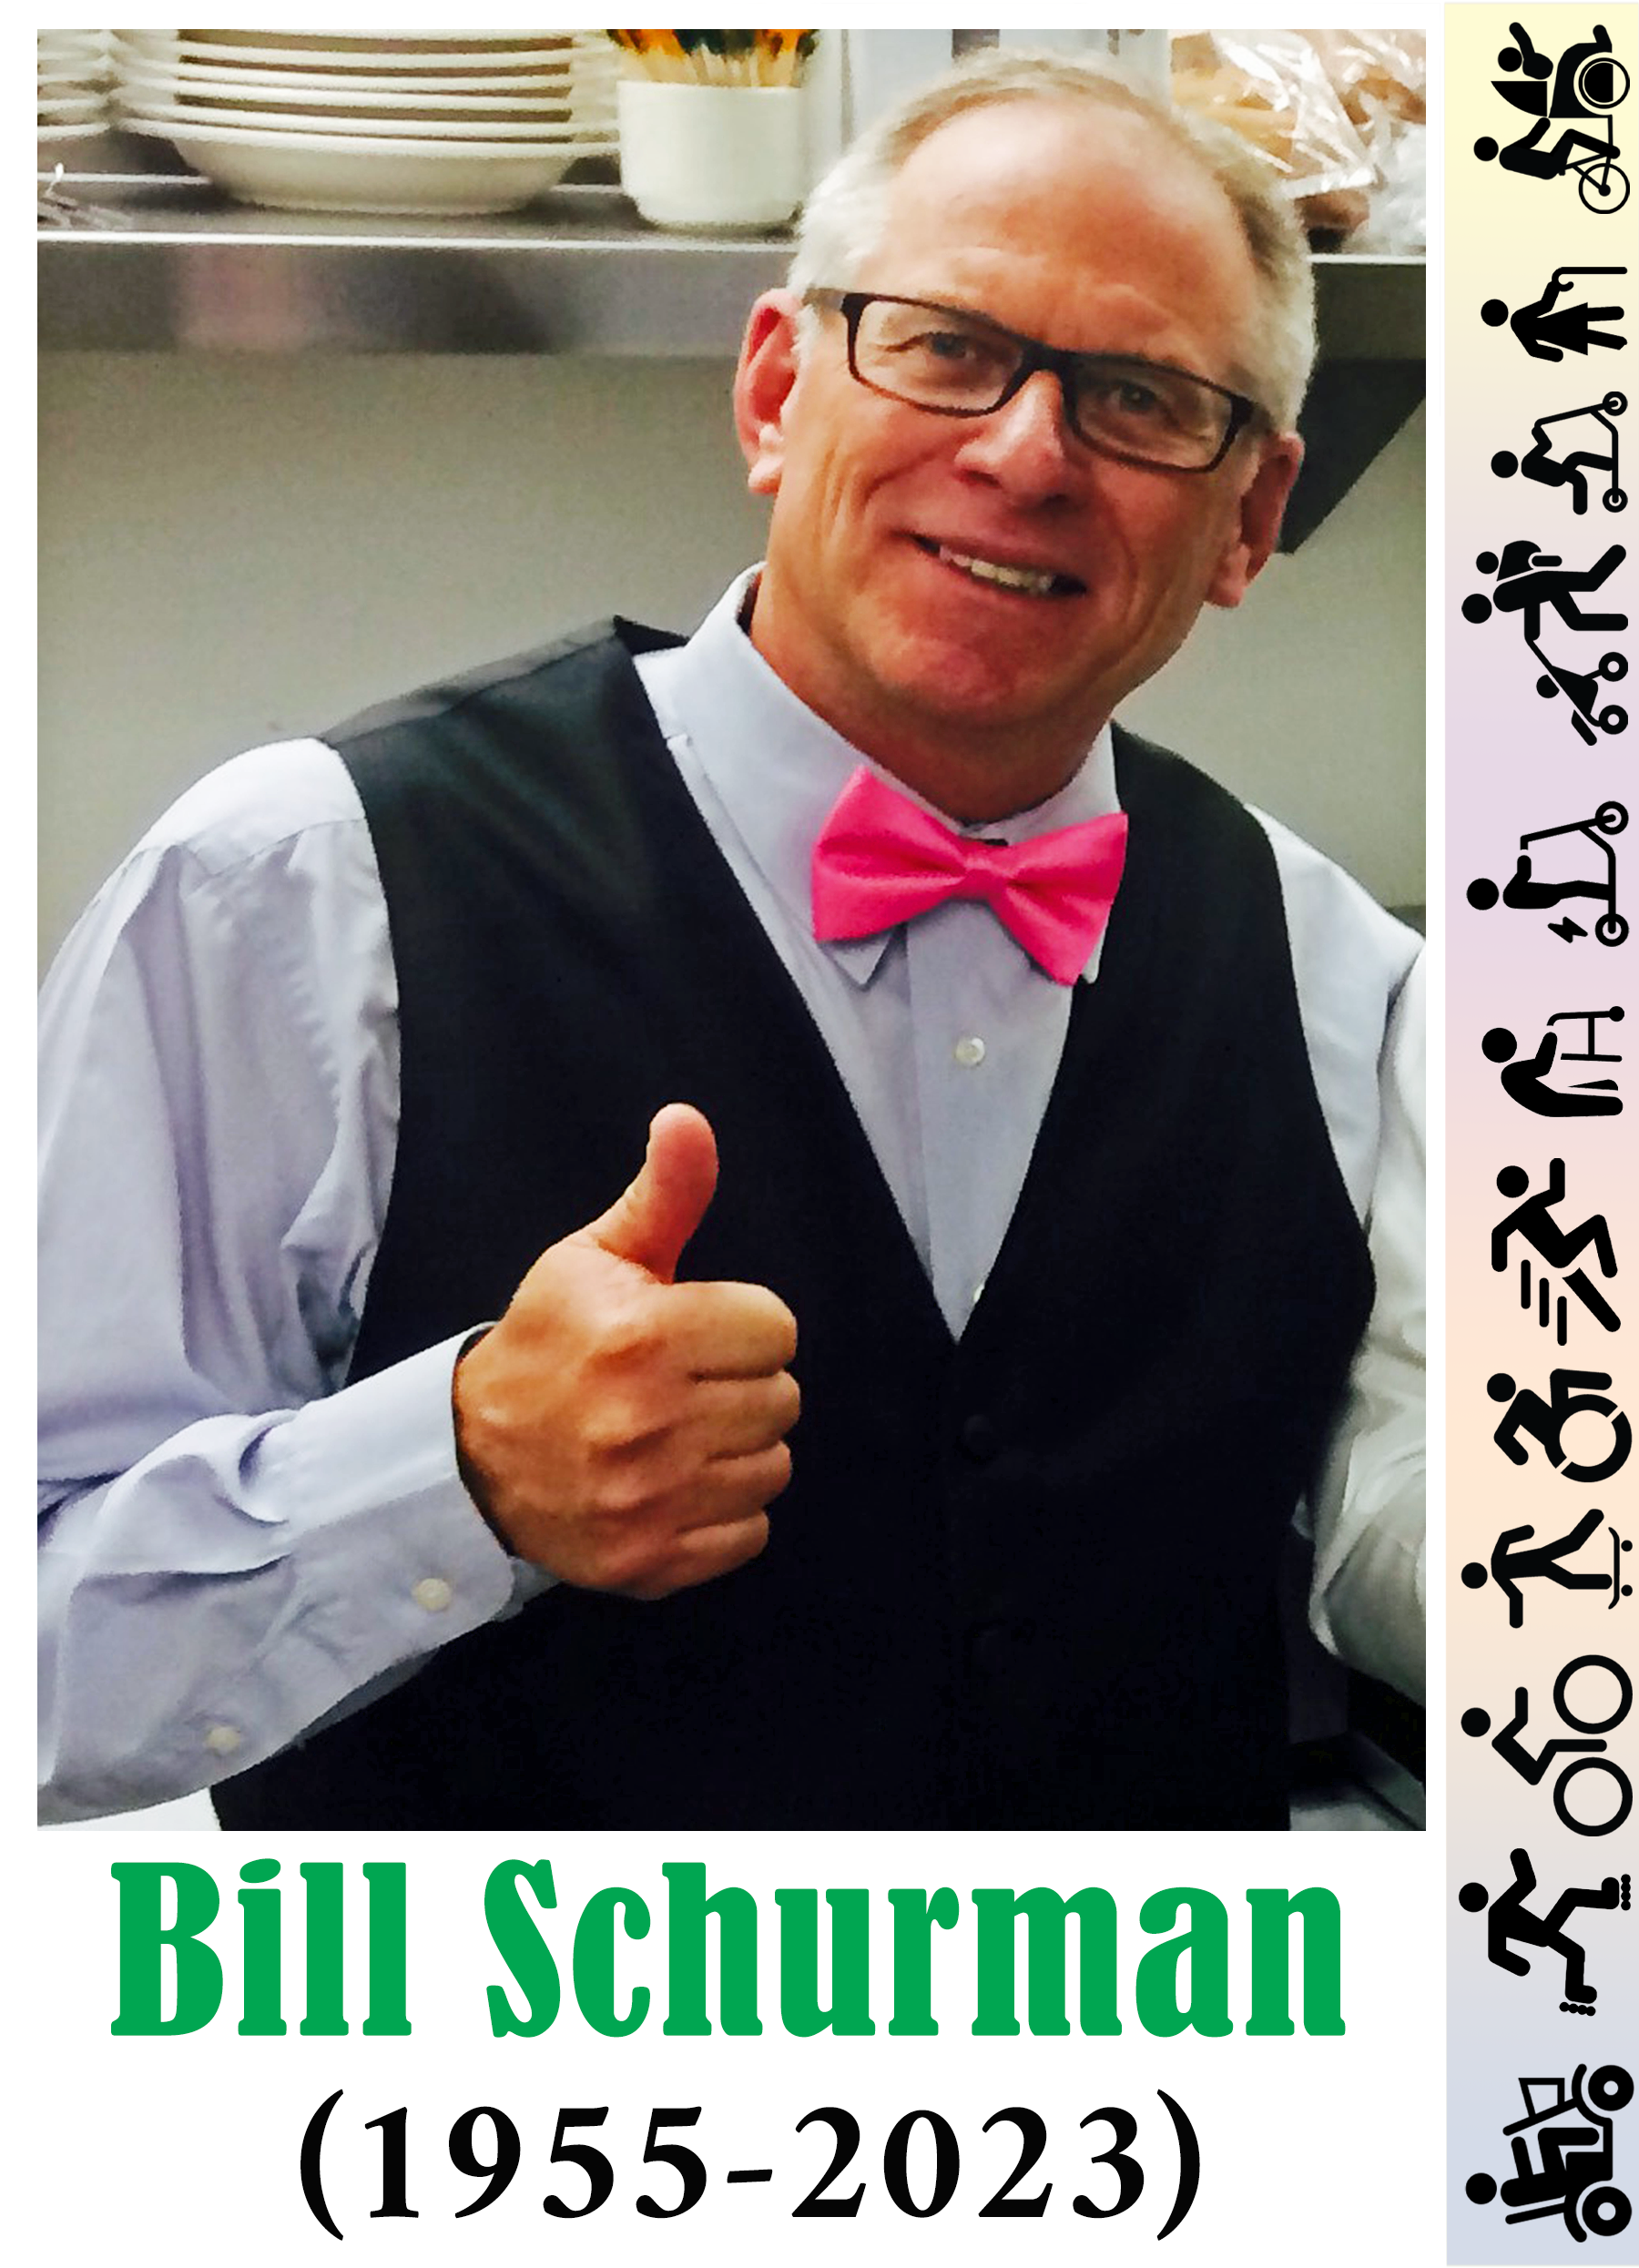 Bill Schurman